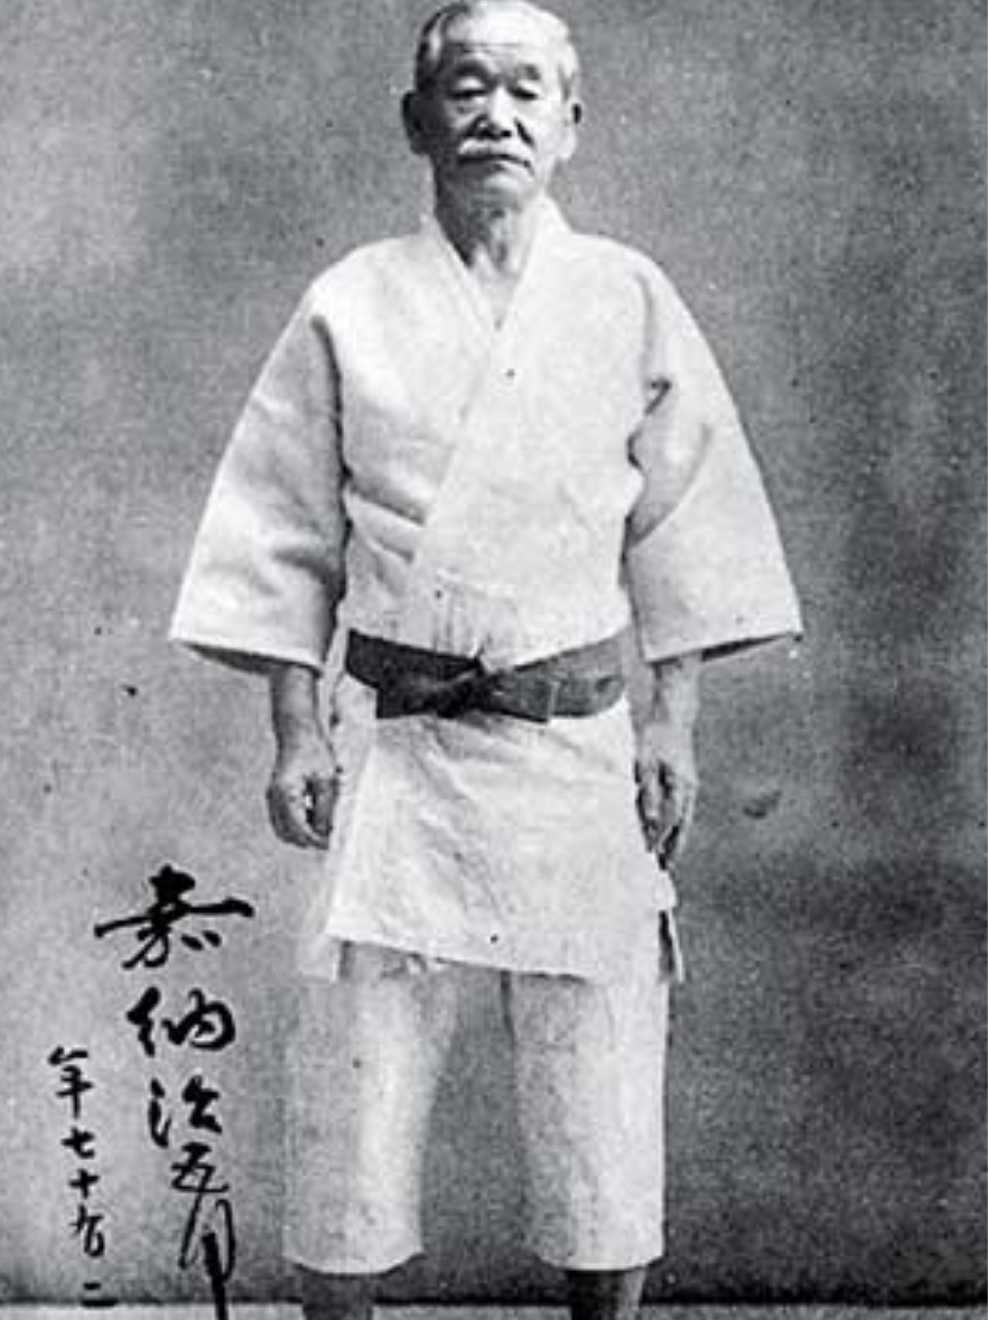 kano jigoro judo founder